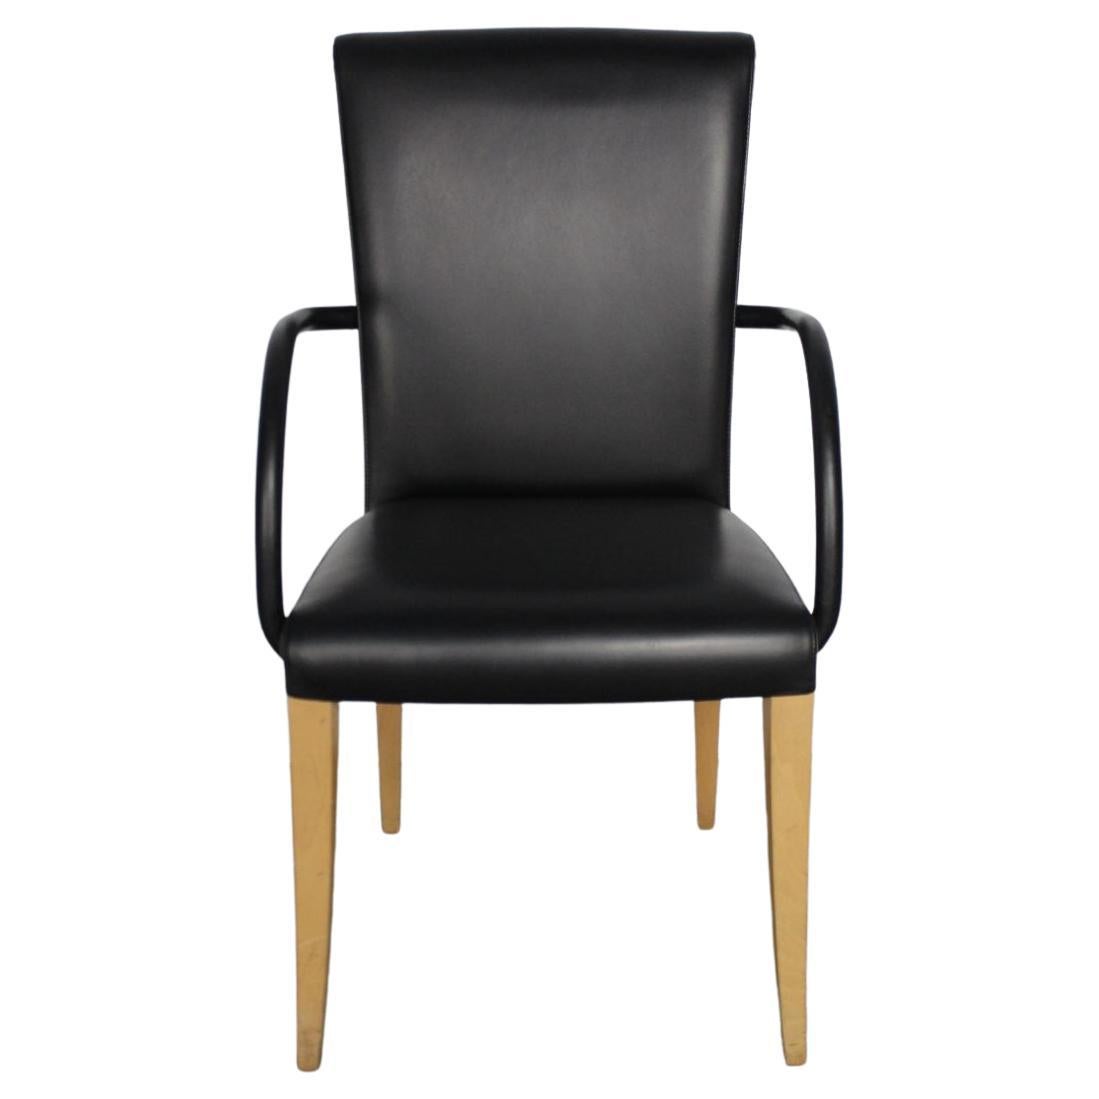 Superb Suite of 12 Poltrona Frau “Vittoria” Dining Chairs in Black “Pelle Frau”